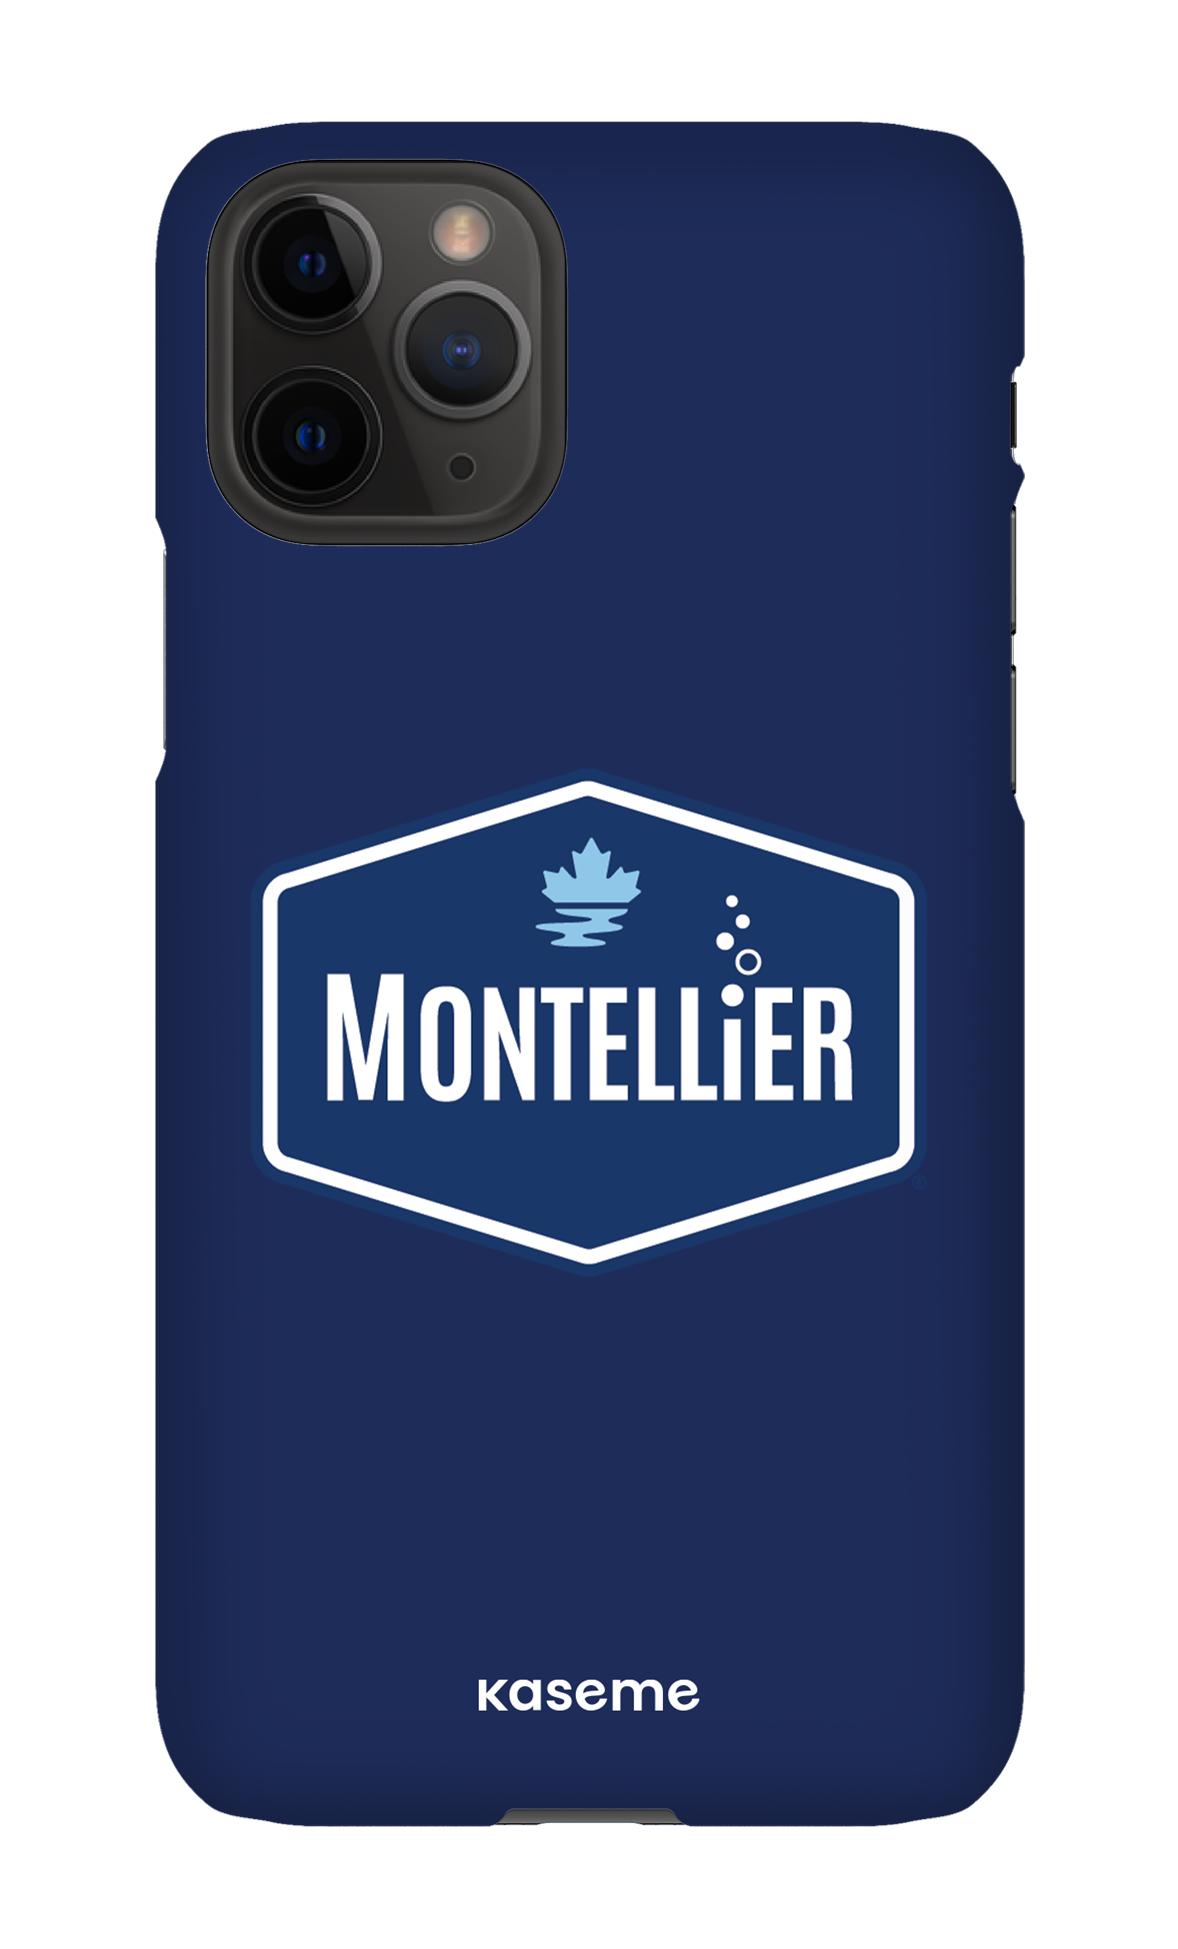 Montellier - iPhone 11 Pro